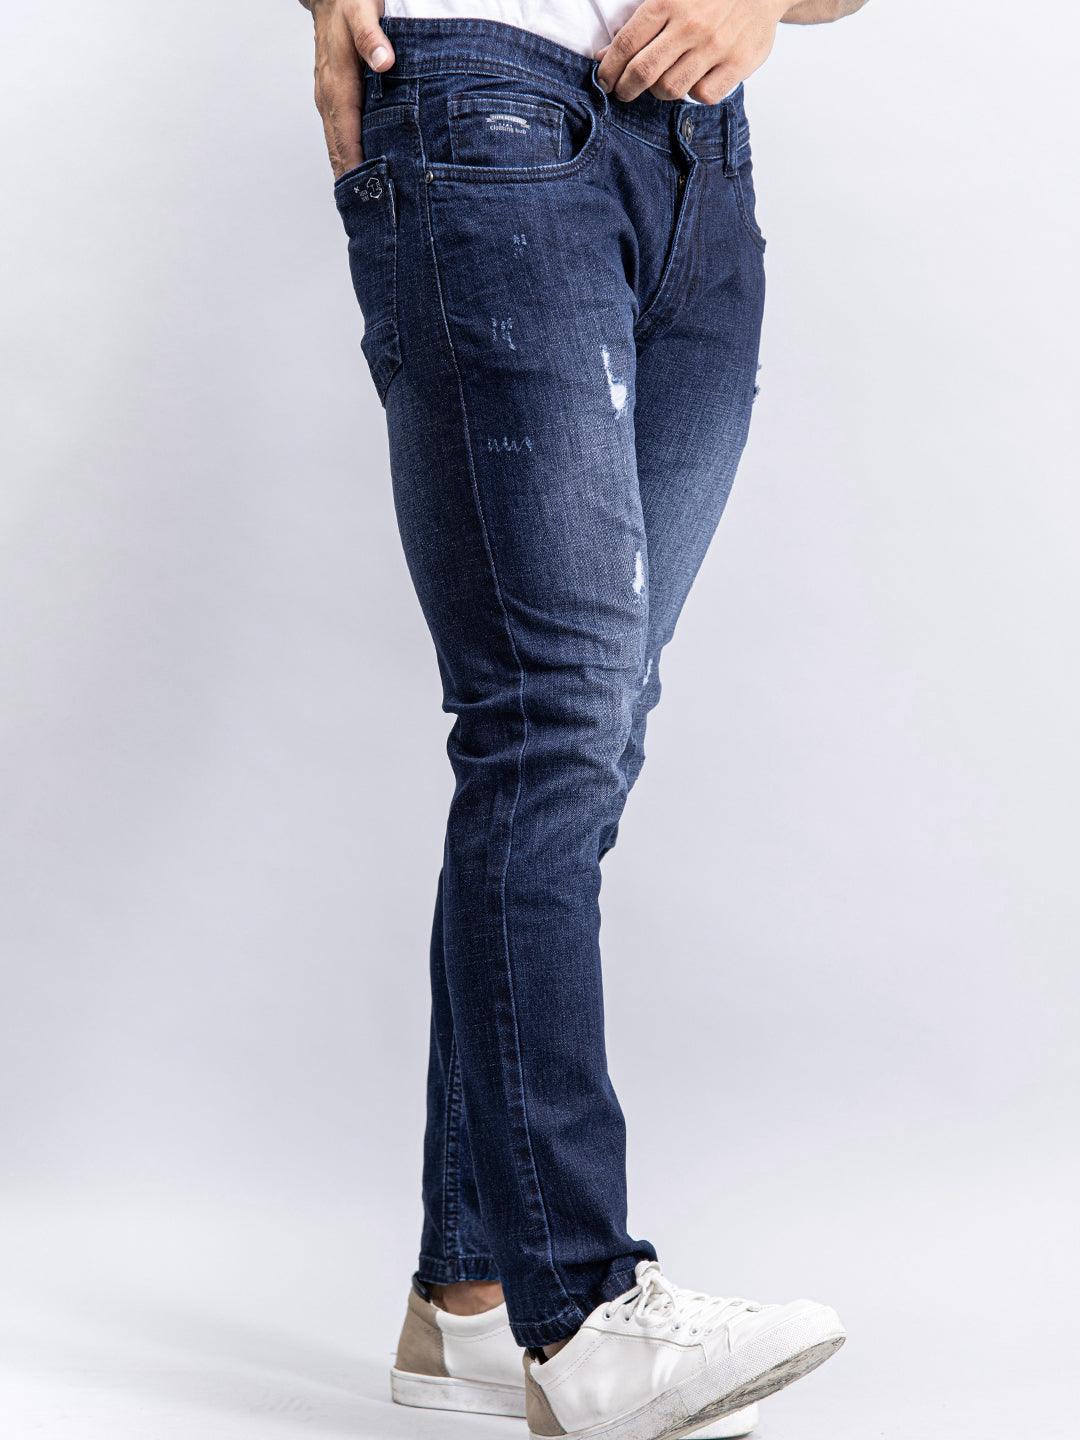 Details 182+ dark navy blue jeans super hot